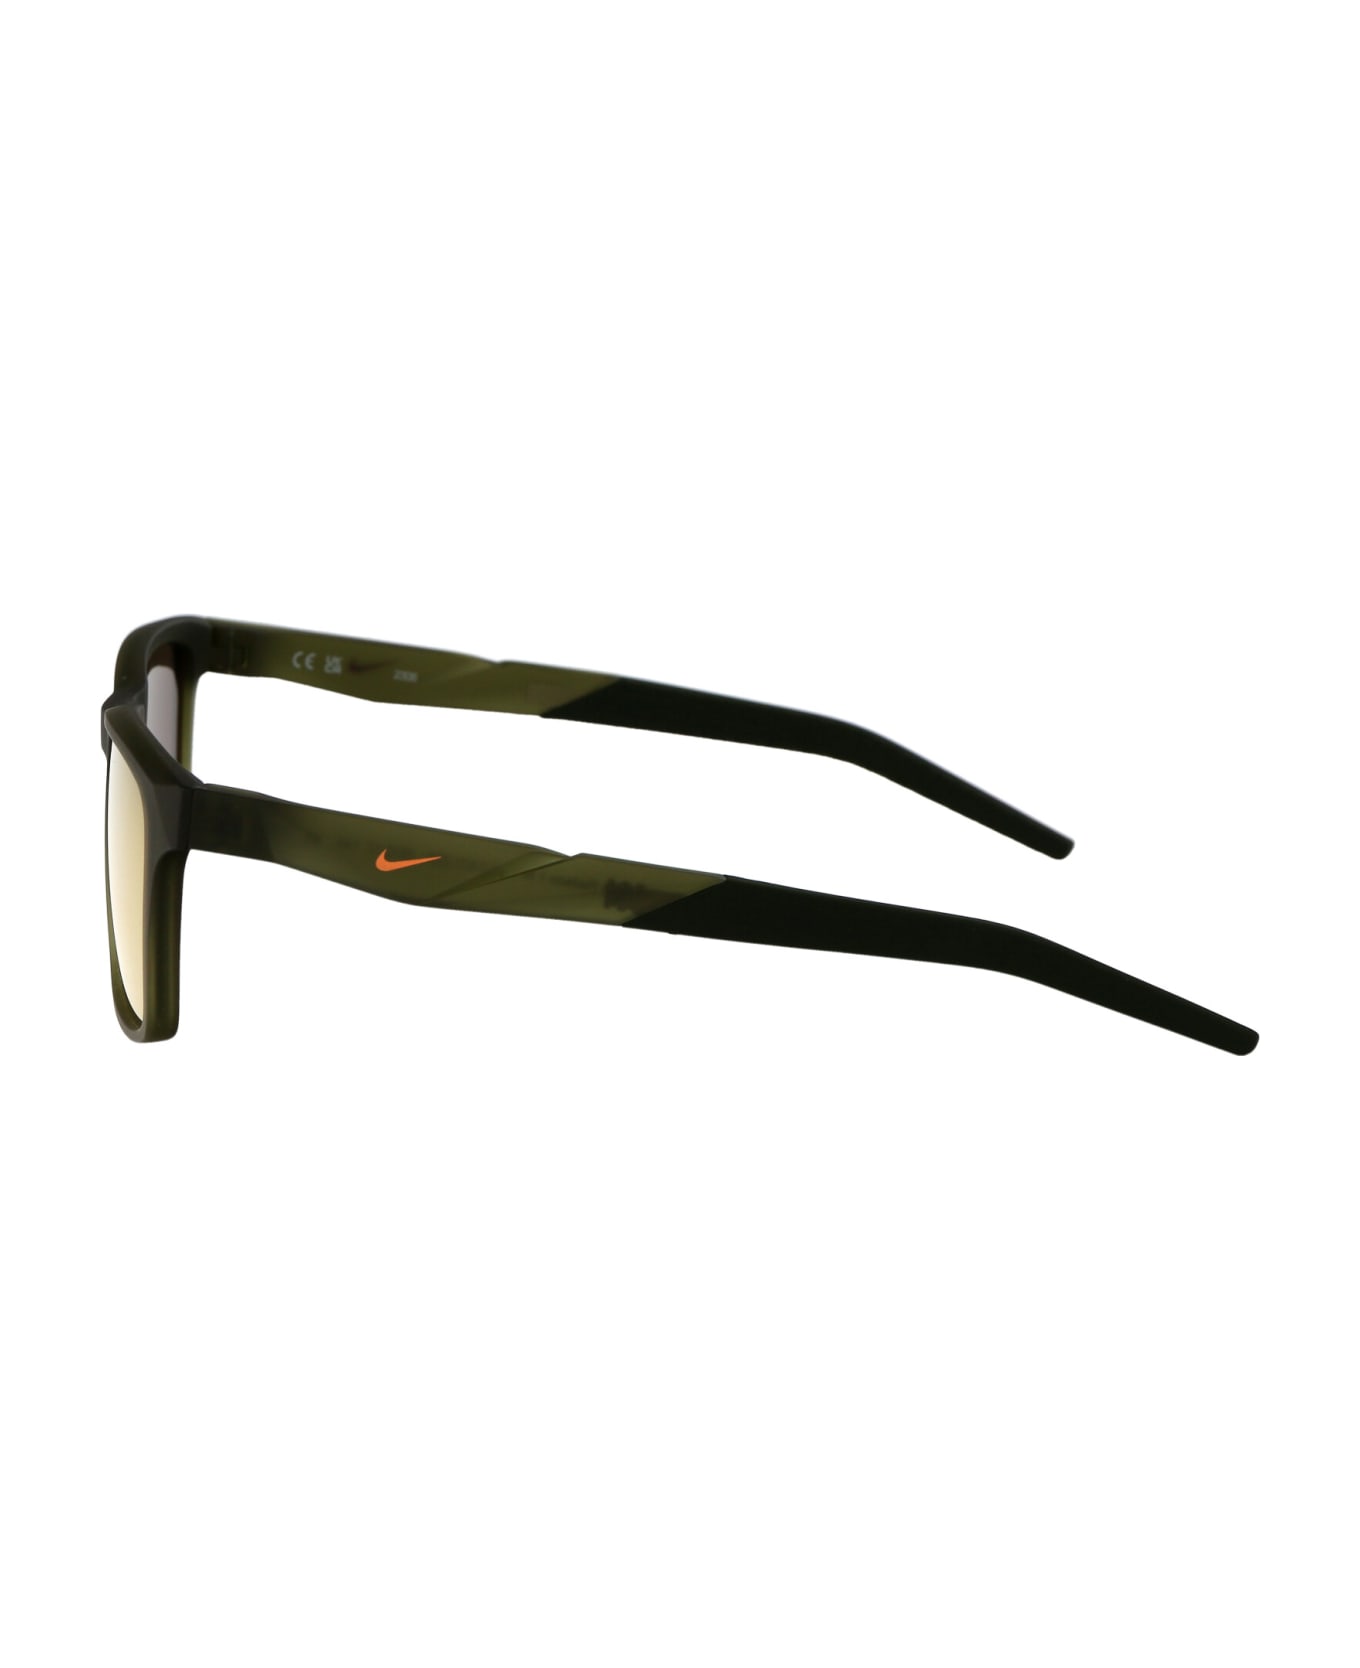 Nike Radeon 1 M Sunglasses - 222 BROWN MATTE MEDIUM OLIVE サングラス